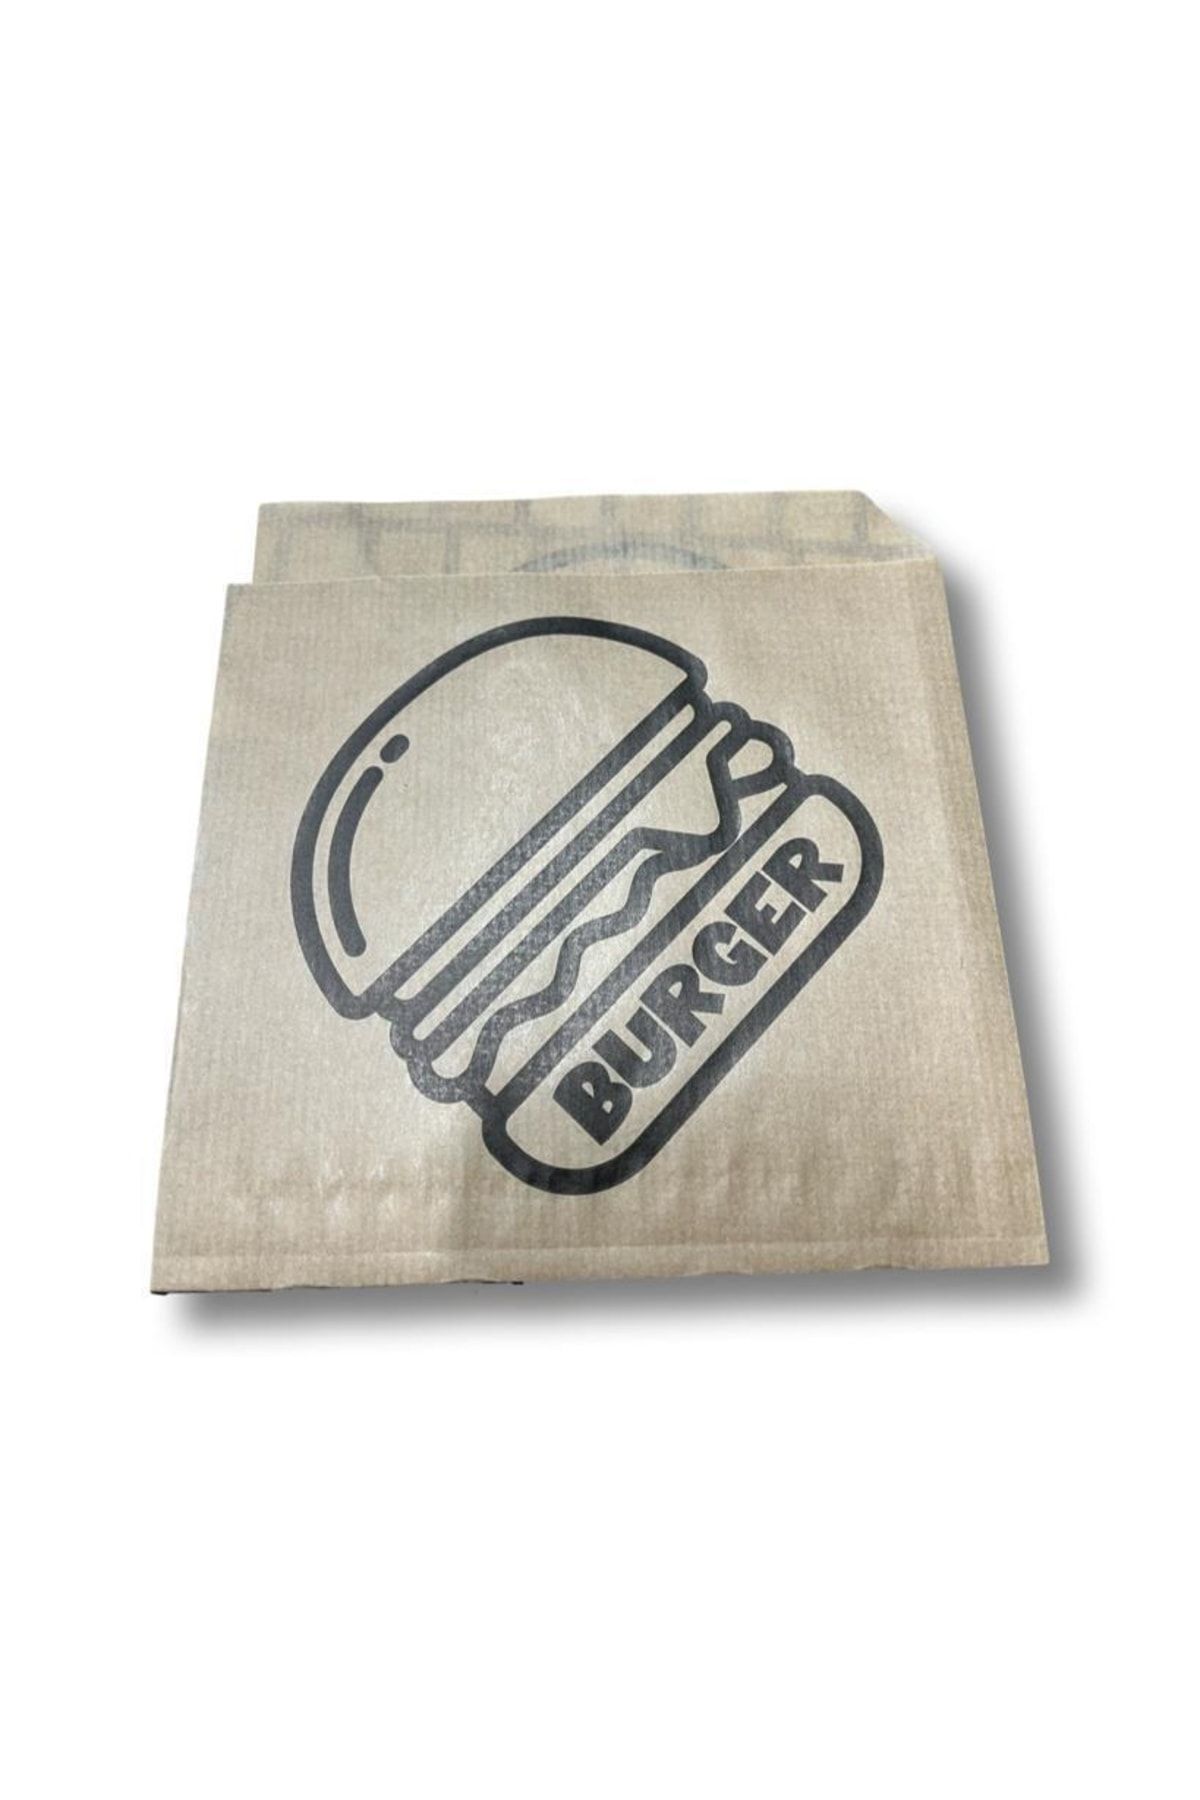 GİZPAK Kese Kağıdı Şamua Hamburger 1000 Li